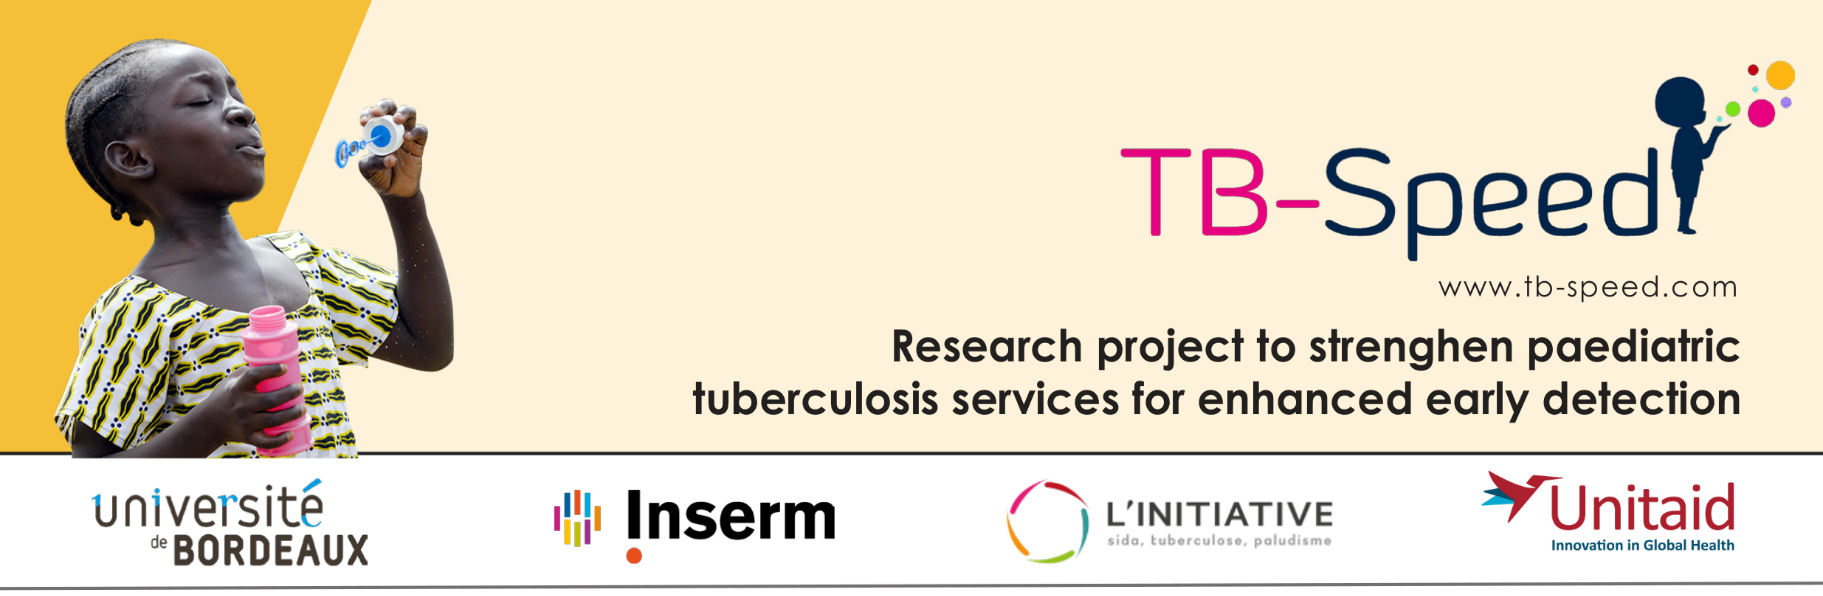 Projet TB-Speed. Symposium international de restitution des résultats